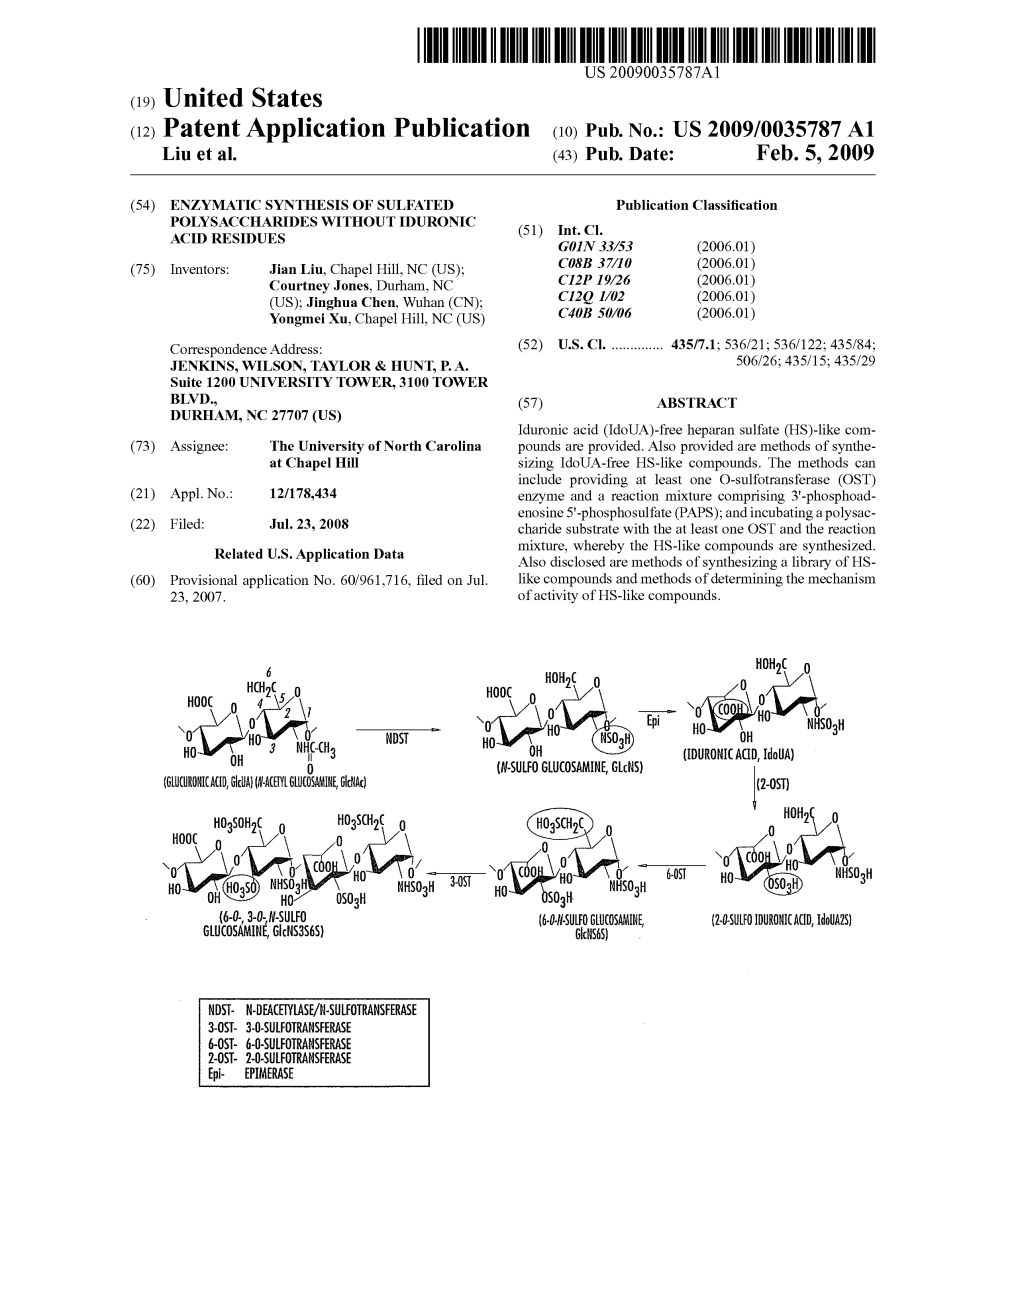 (12) Patent Application Publication (10) Pub. No.: US 2009/0035787 A1 Liu Et Al